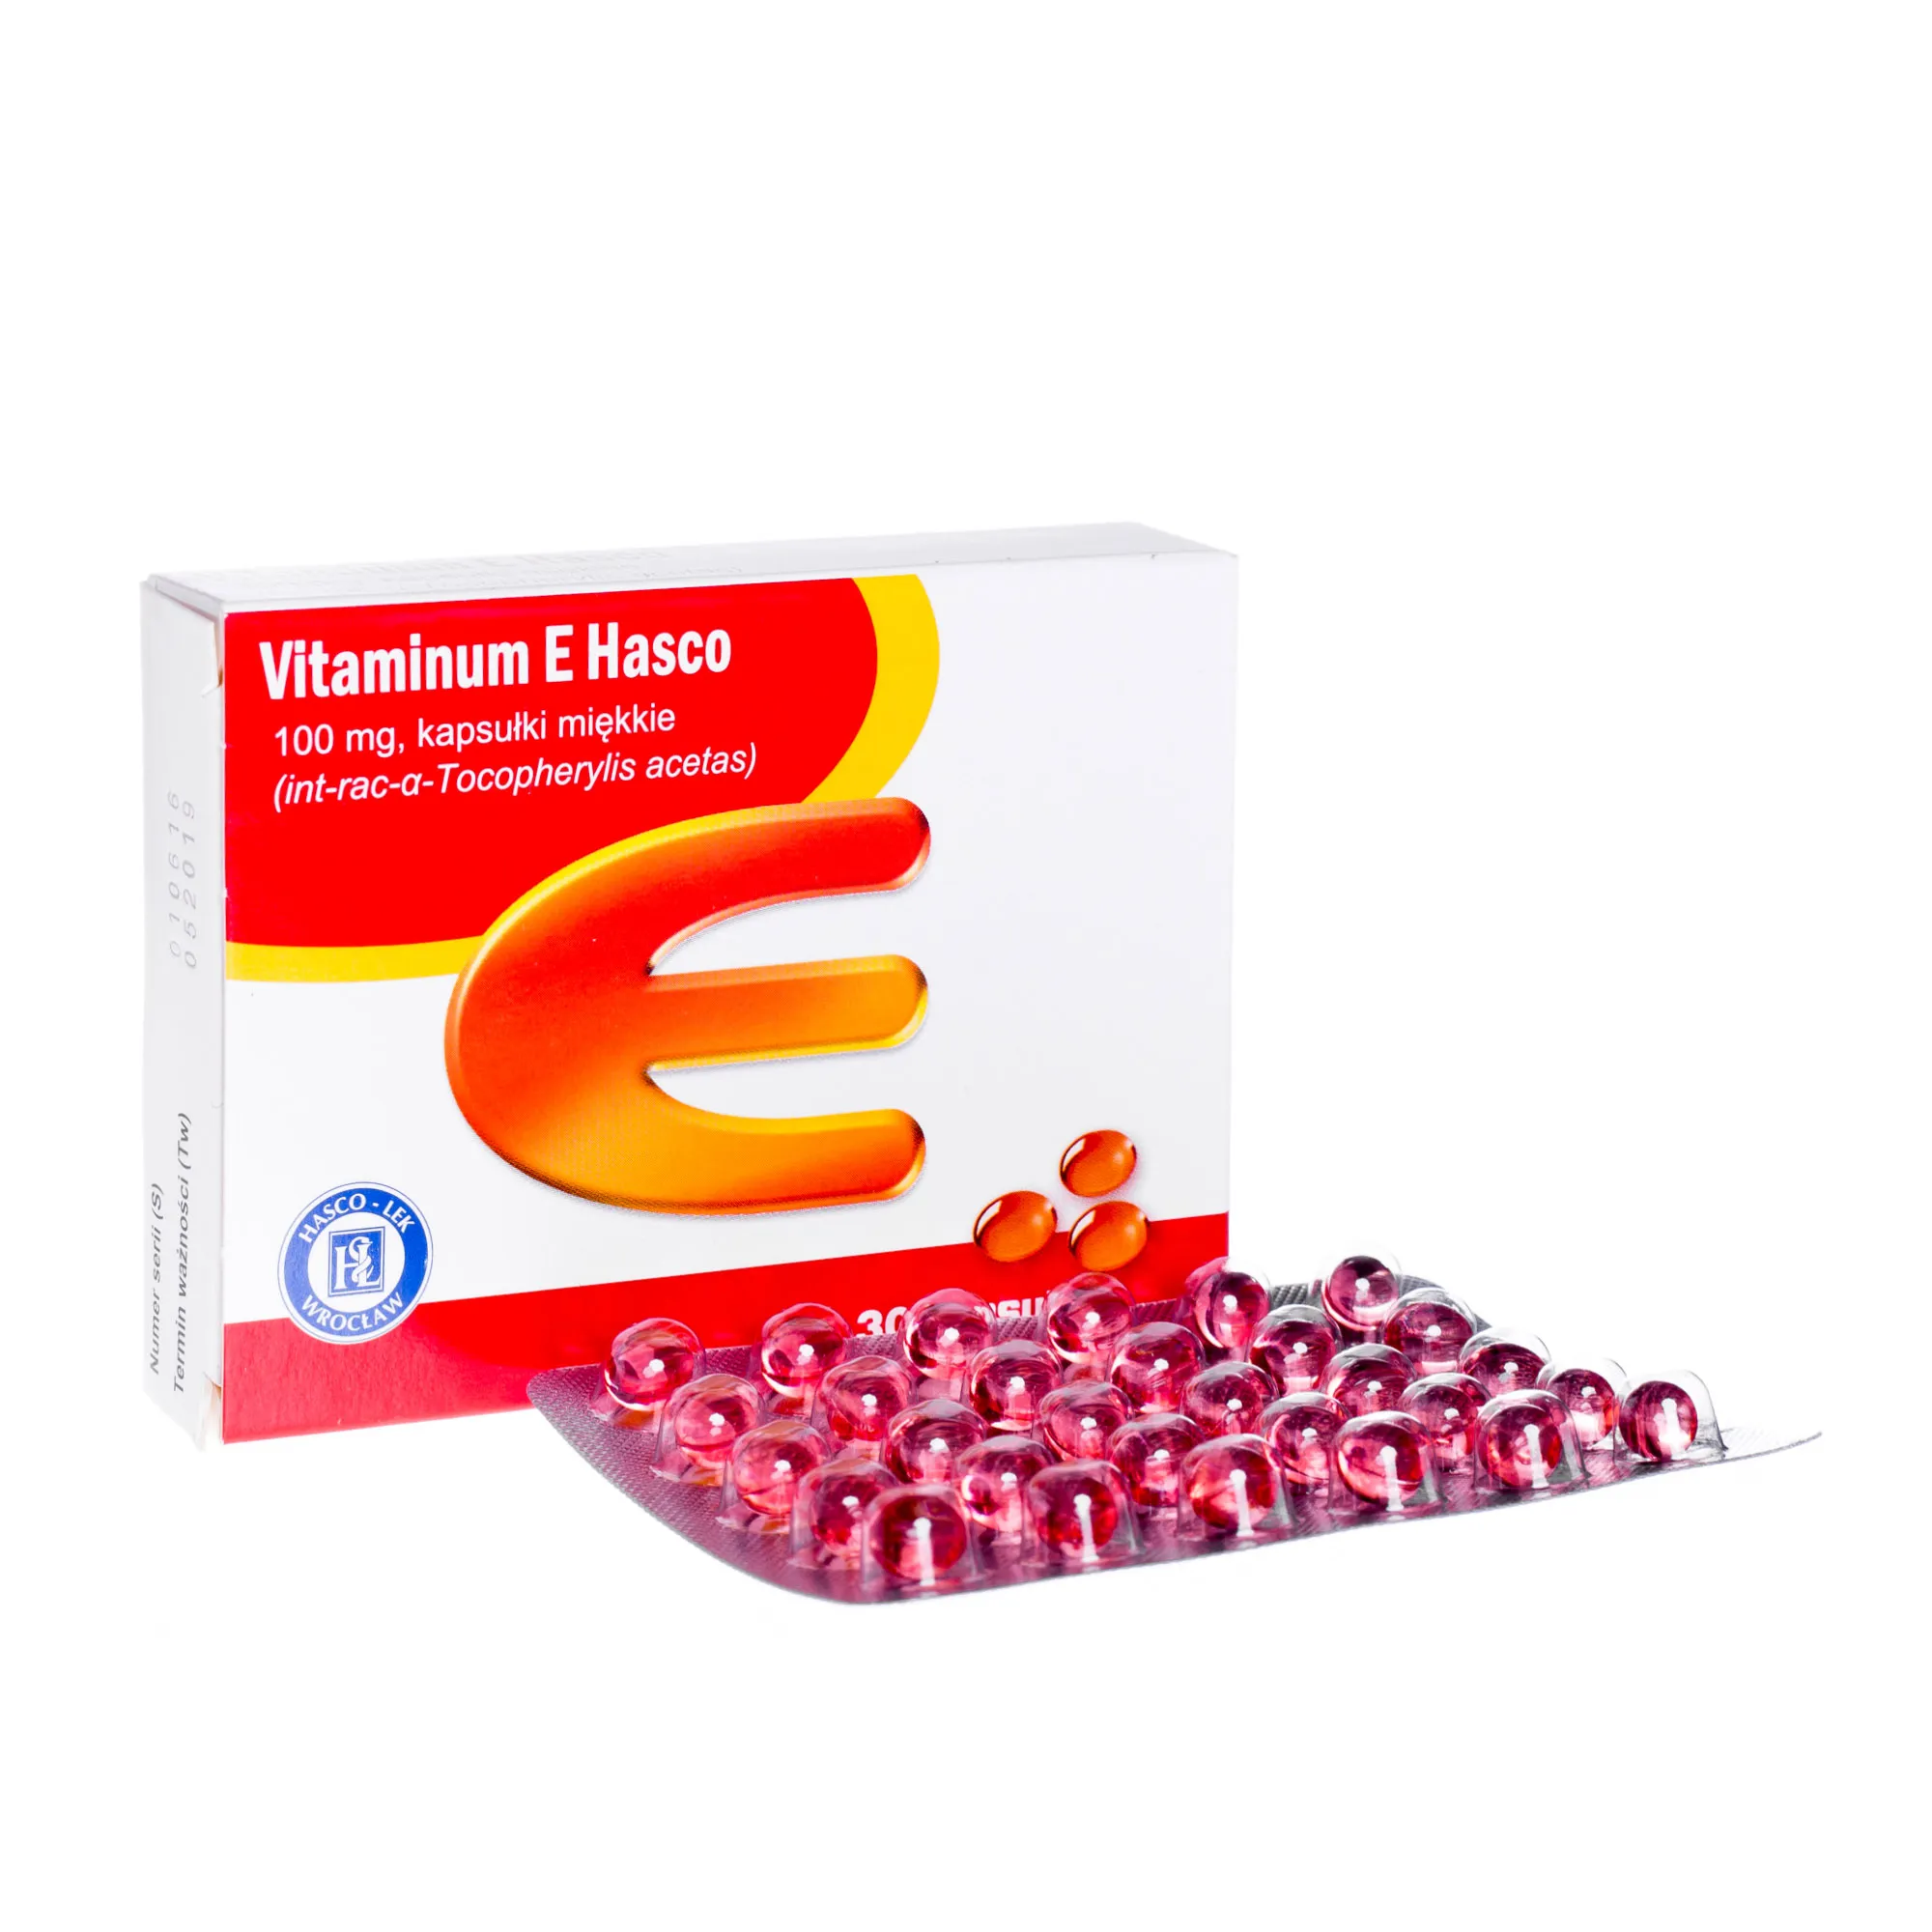 Vitaminum E Hasco, ( int-rac-aTocopherylis acetas 100 mg ), 30 kapsułek 